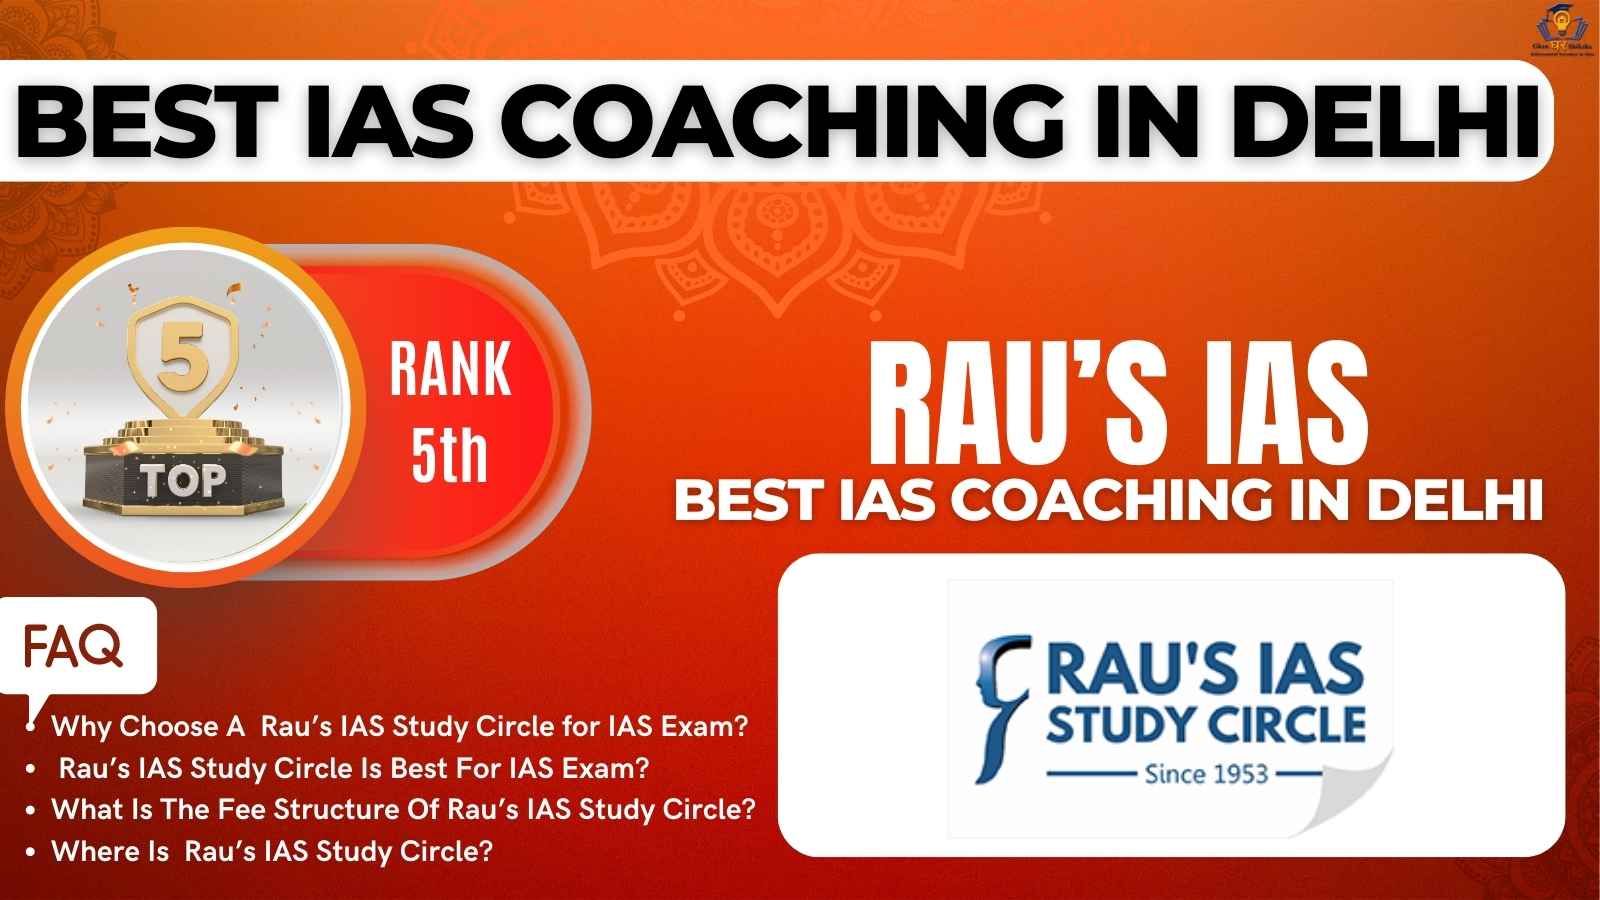  Top IAS Coaching of Delhi